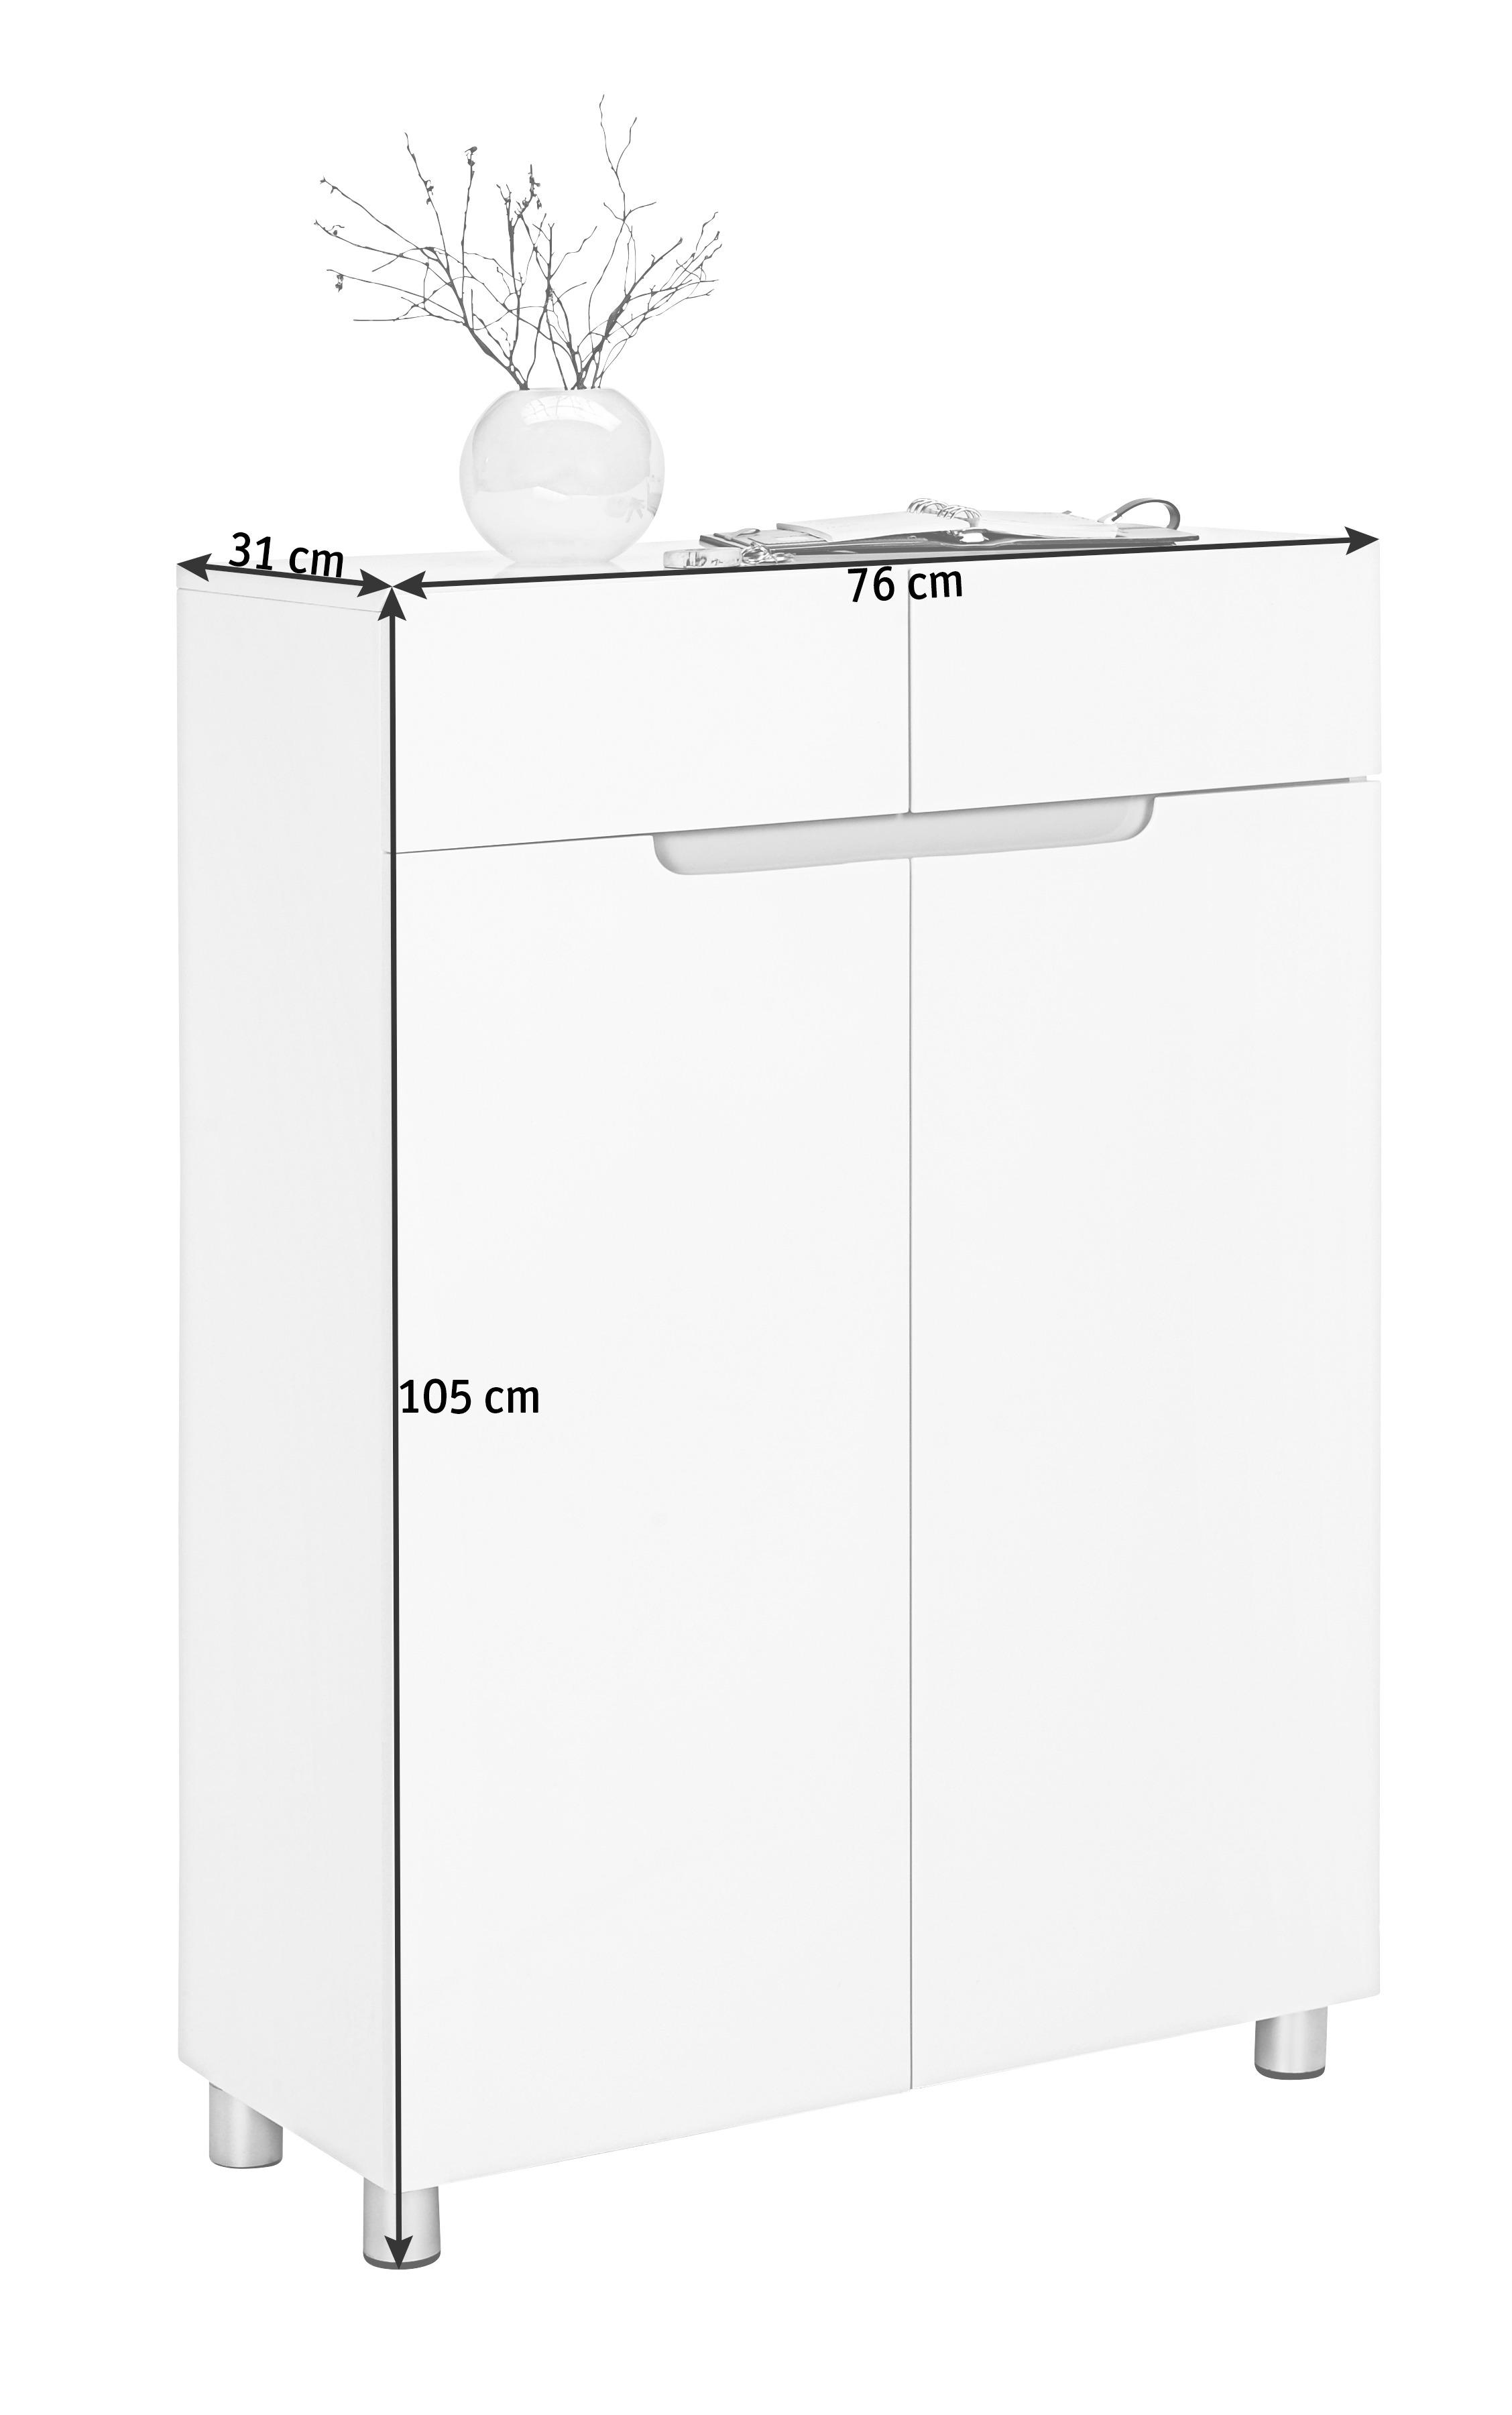 SCHUHSCHRANK Grau, Weiß  - Weiß/Grau, Design (76/105/31cm) - Xora